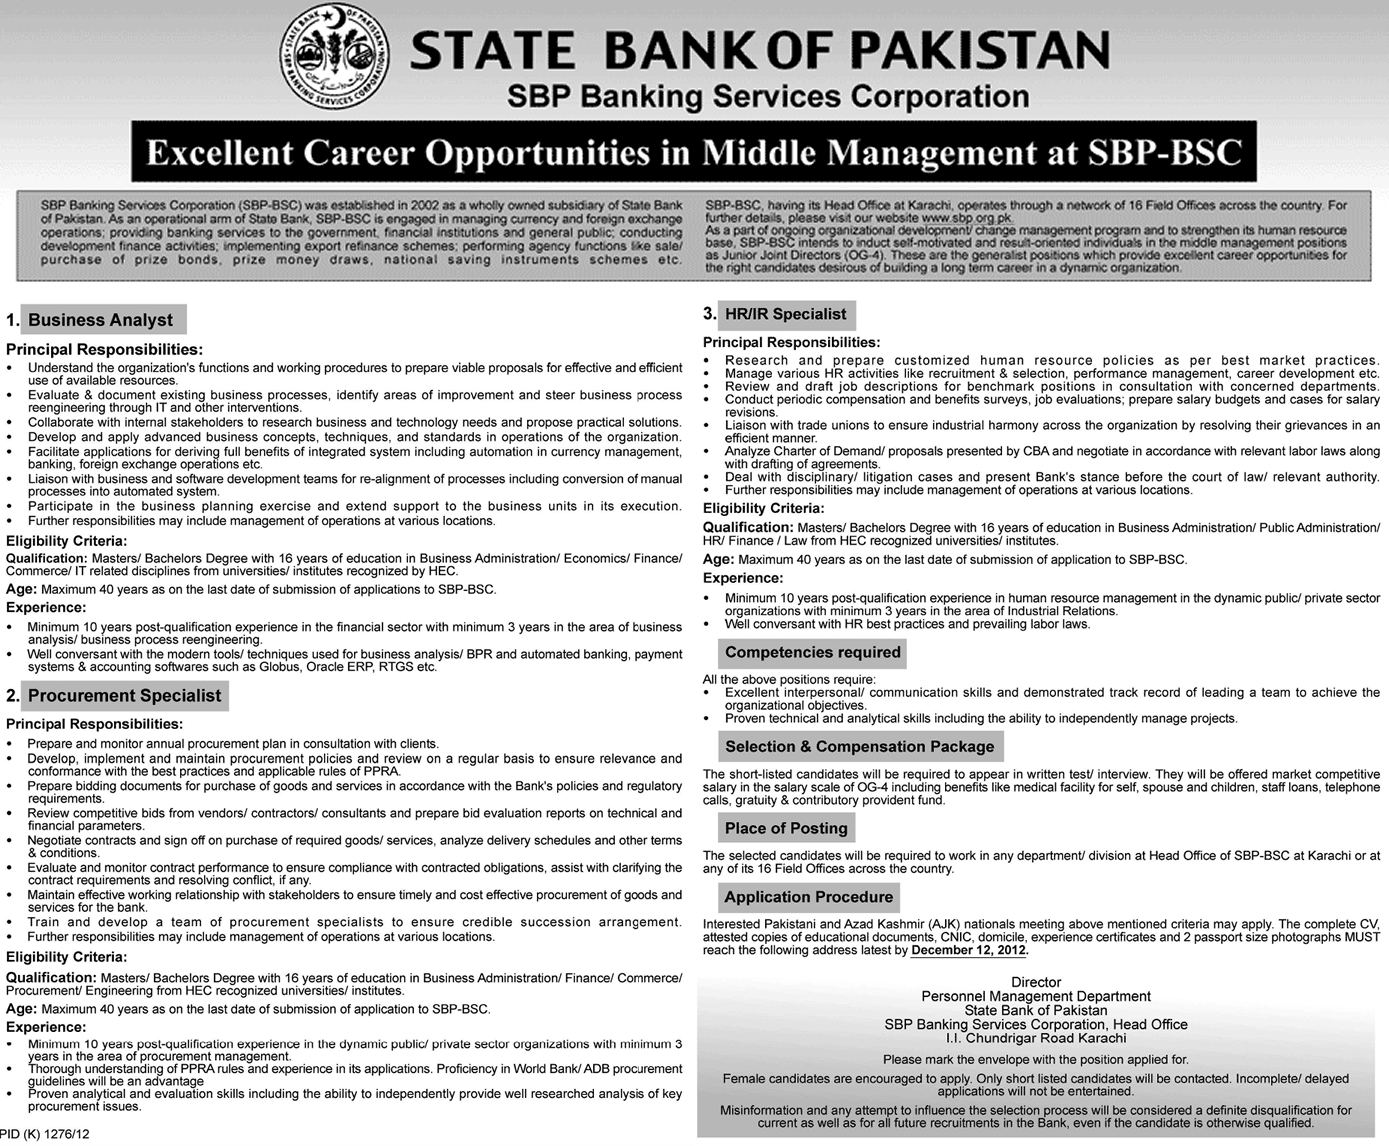 State Bank of Pakistan (SBP) Jobs November 2012 for Middle Management at SBP-BSC